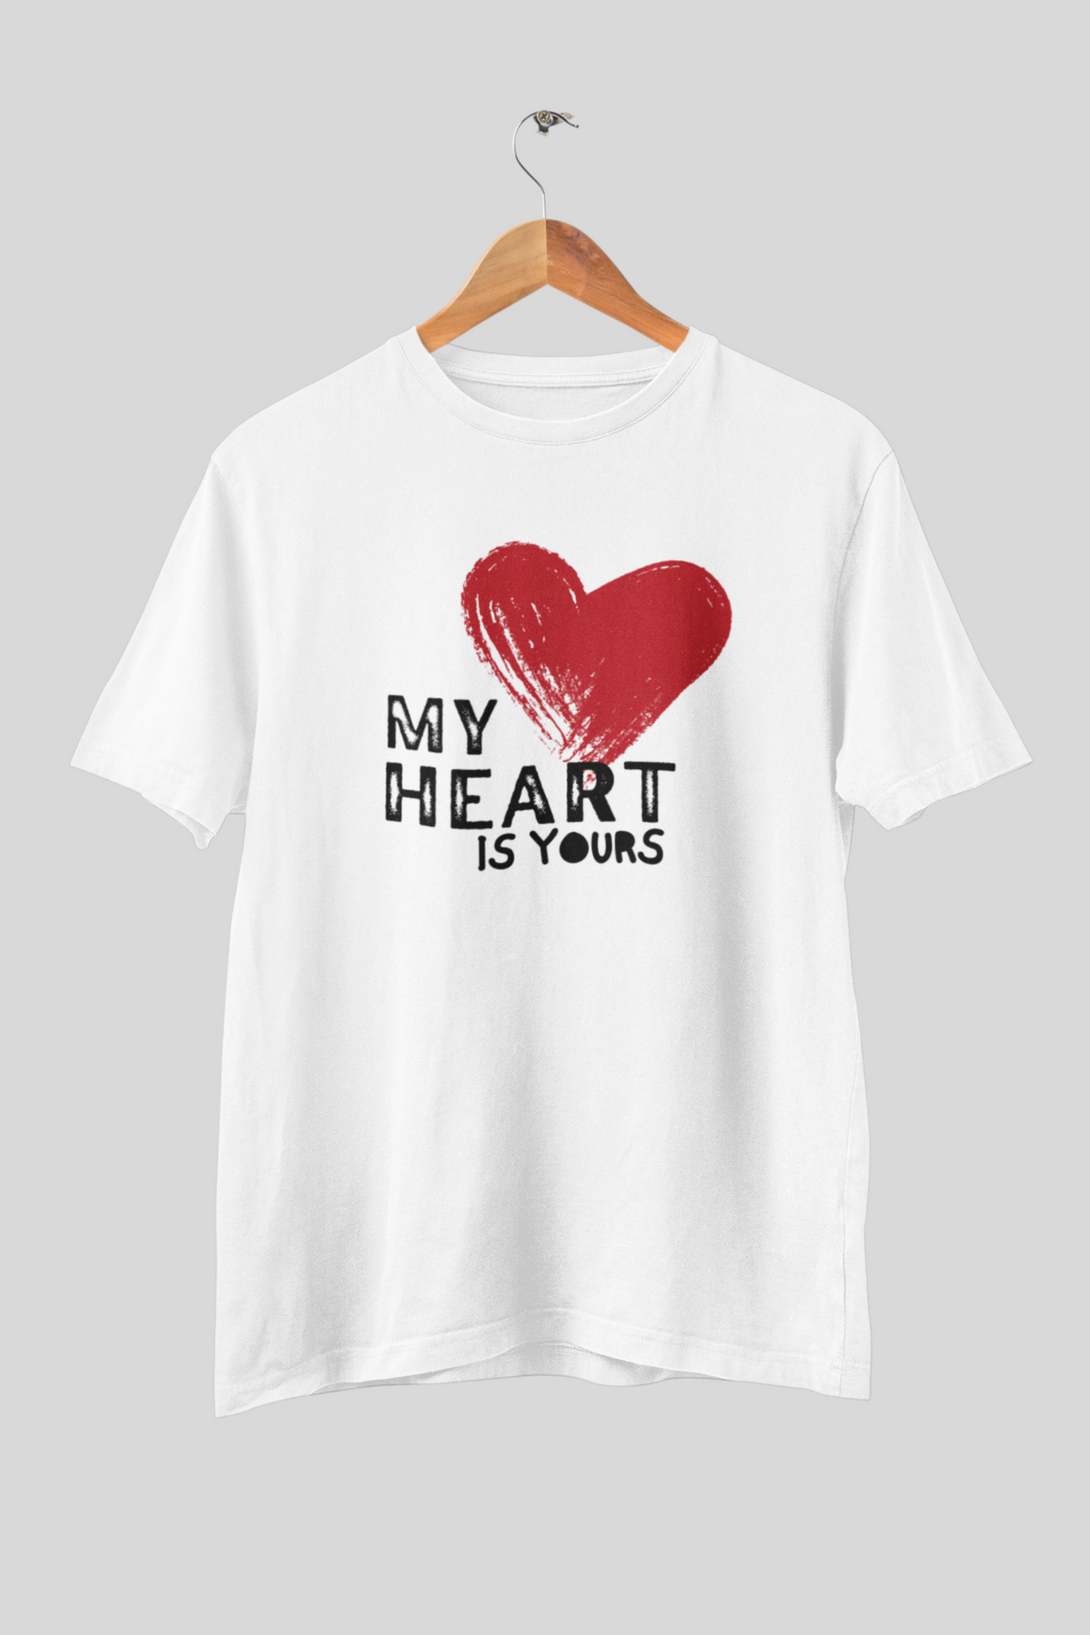 Take My Heart Couple T Shirt - WowWaves - 2